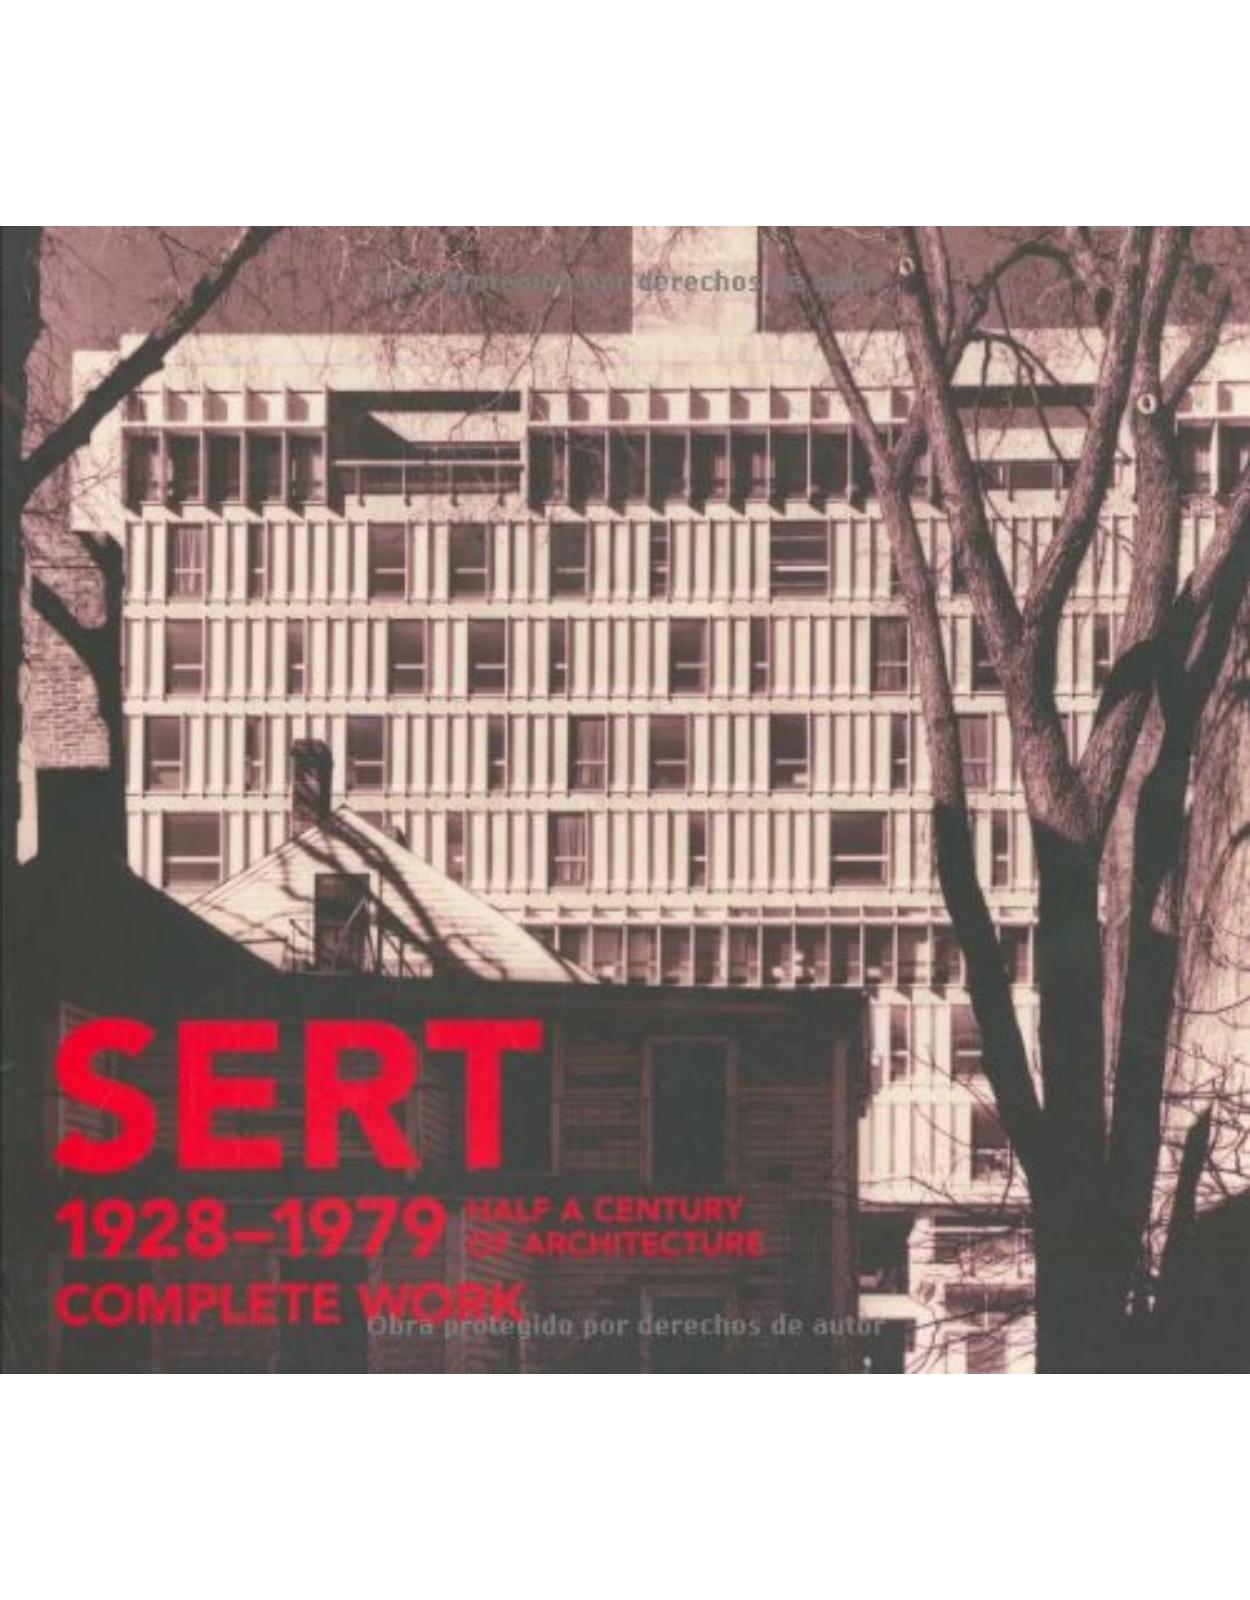 Sert 1928-1979